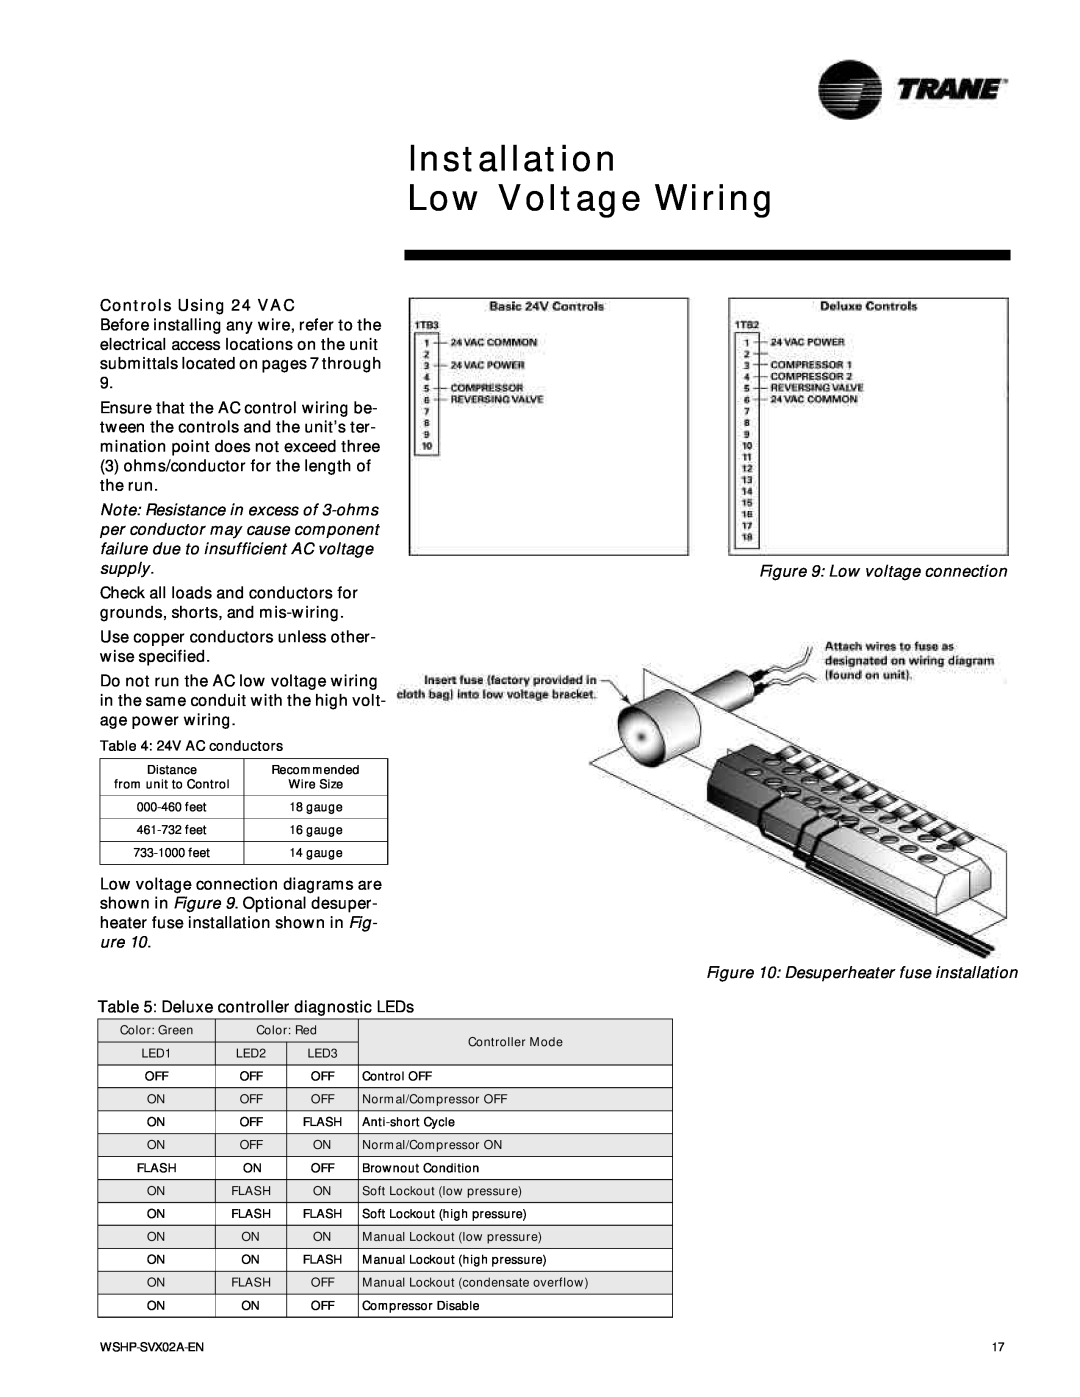 Trane GSWD Installation Low Voltage Wiring, Controls Using 24 VAC, Low voltage connection, Desuperheater fuse installation 